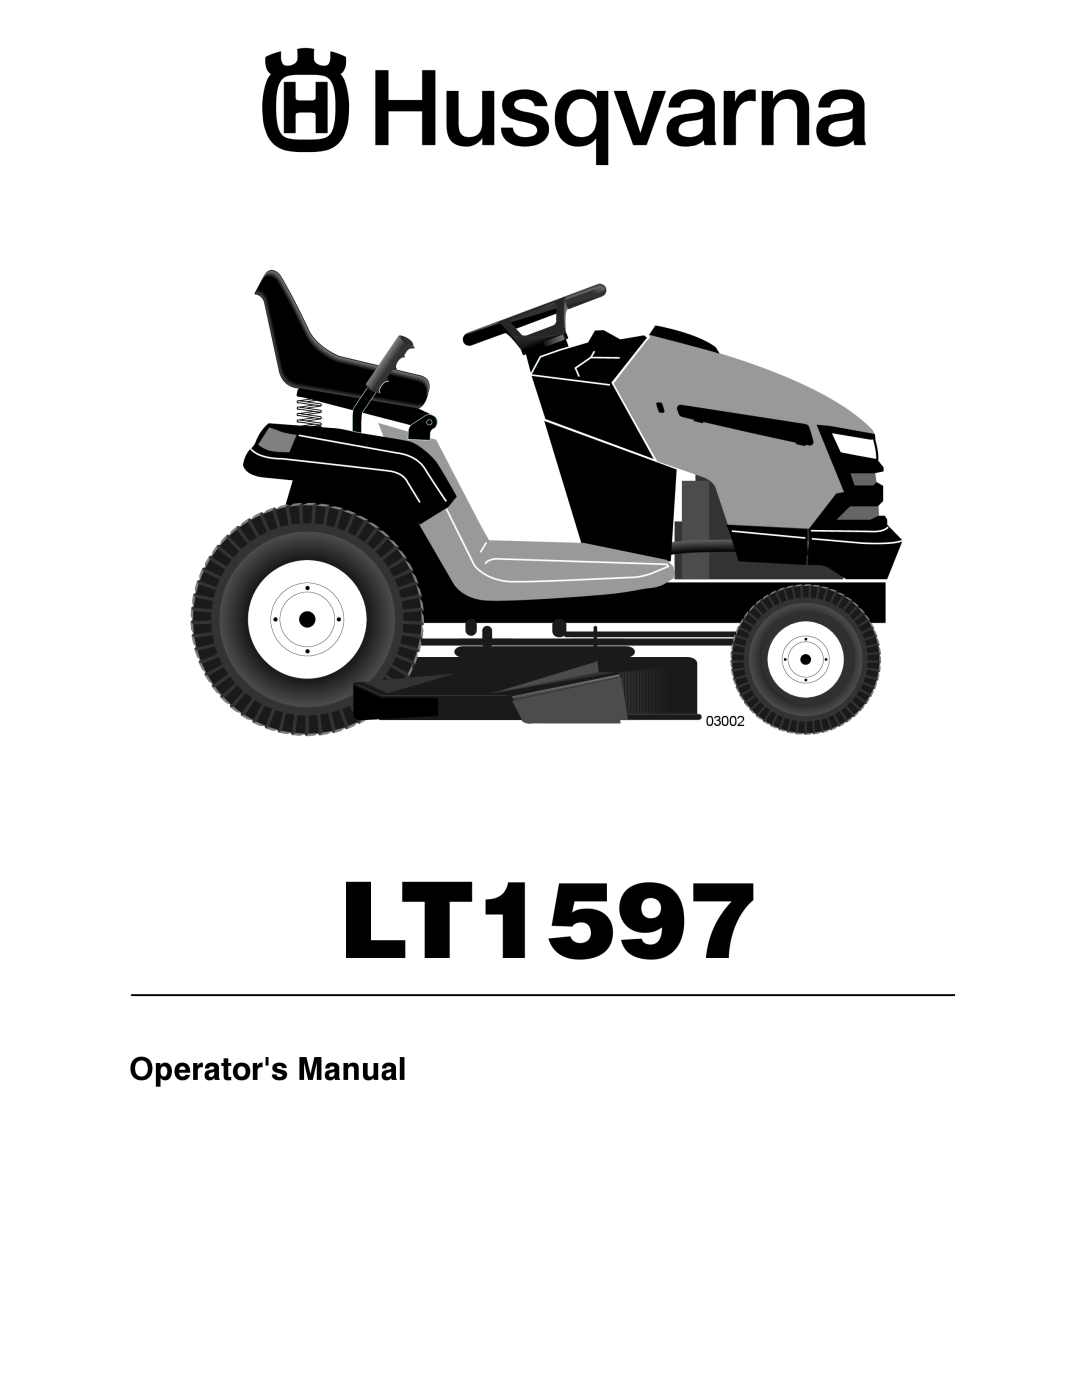 Husqvarna TS300-E3 manual Operators Manual, LT1597, 03002 